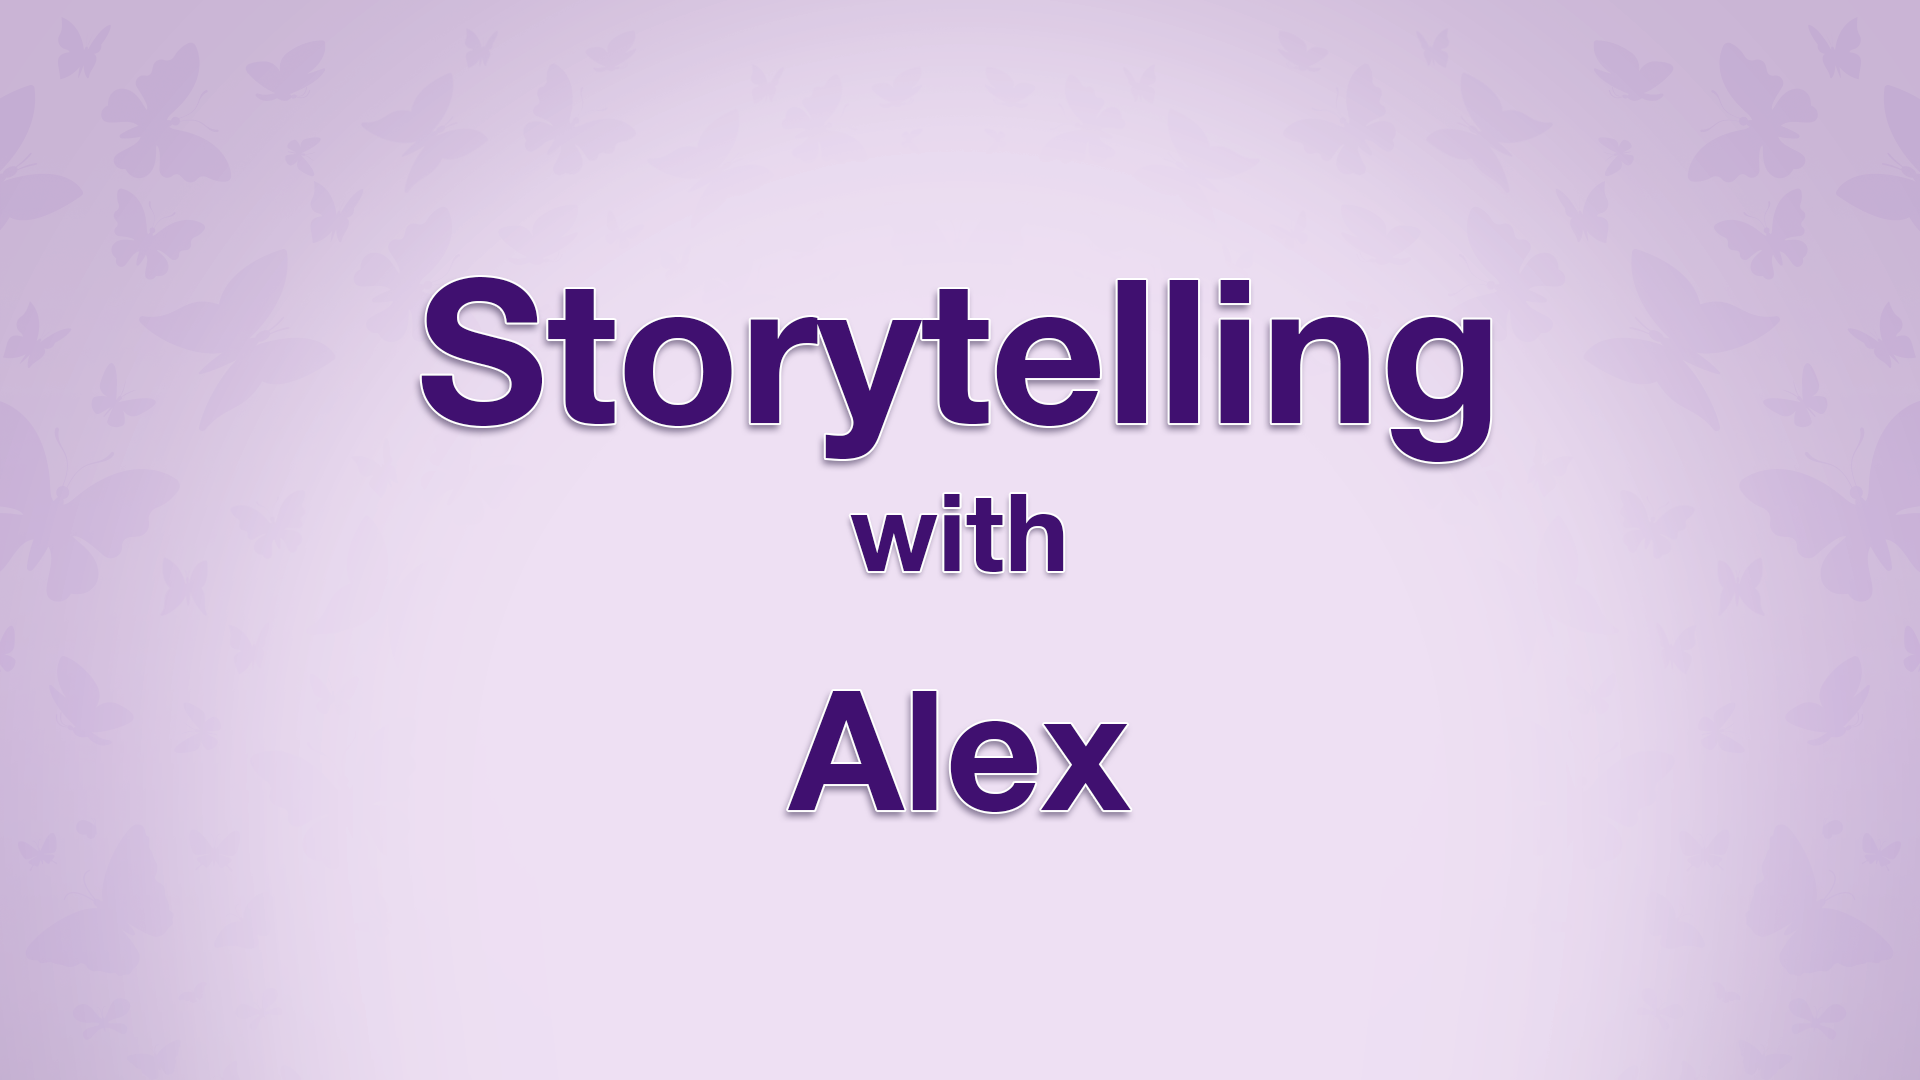 HEAR ALEX'S STORY